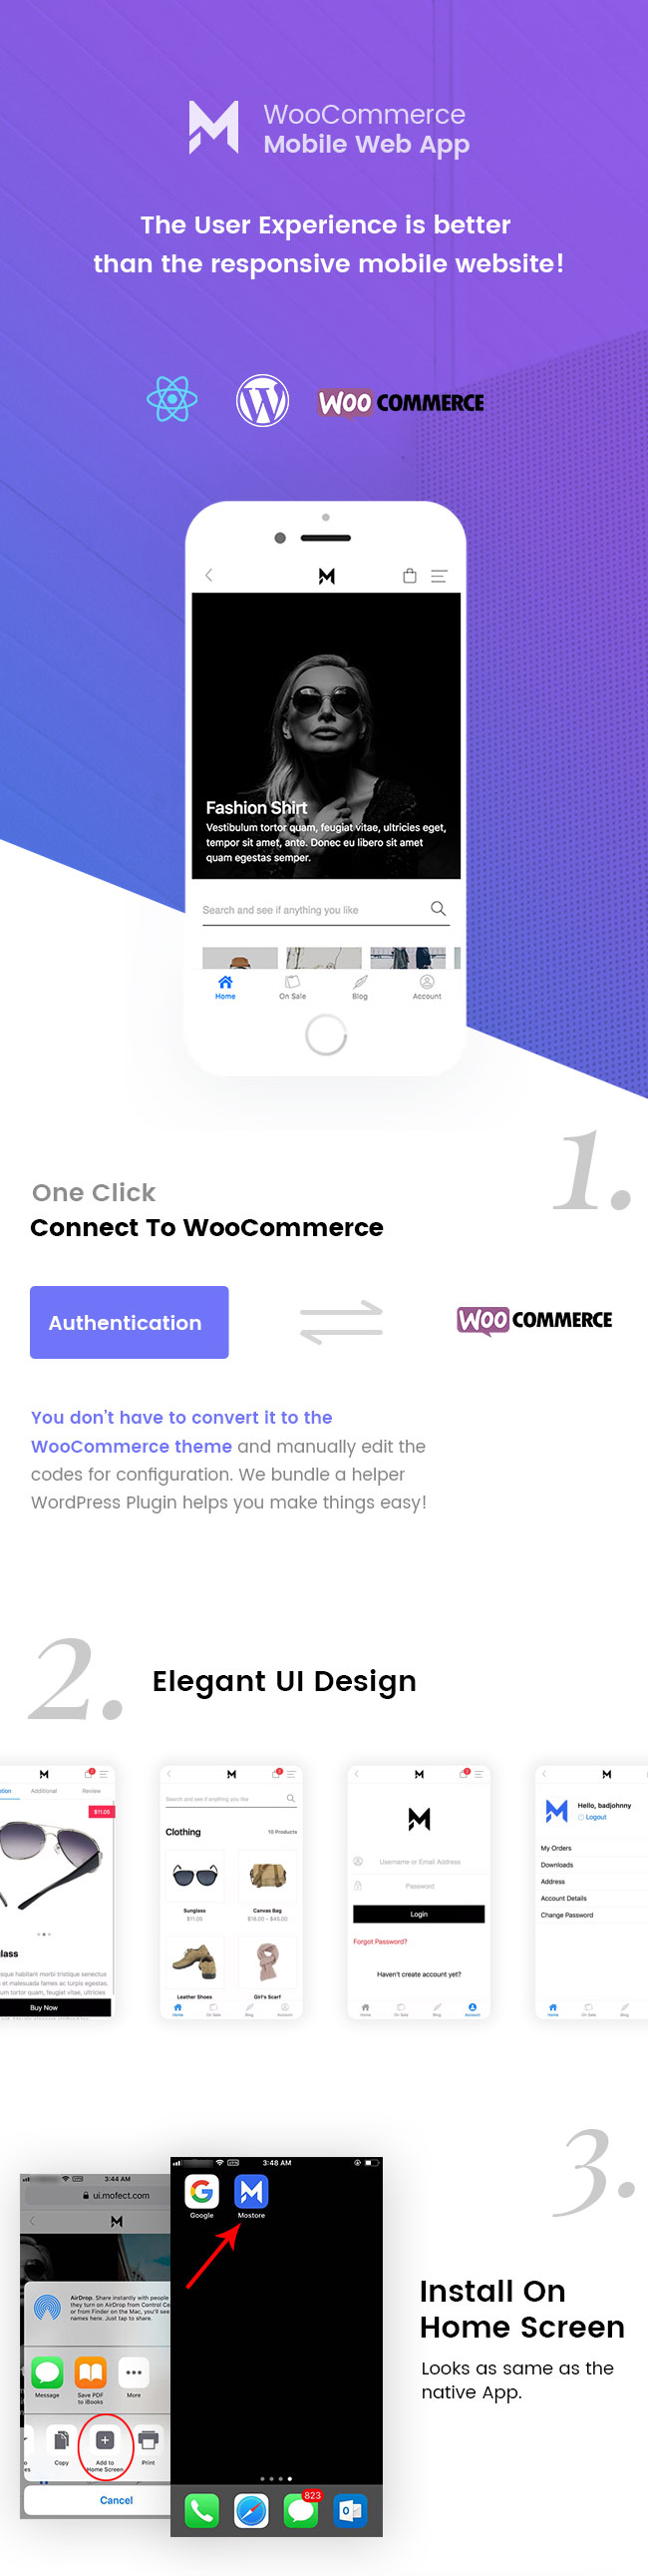 Mostore - WooCommerce Mobile Progressive Web App - 2